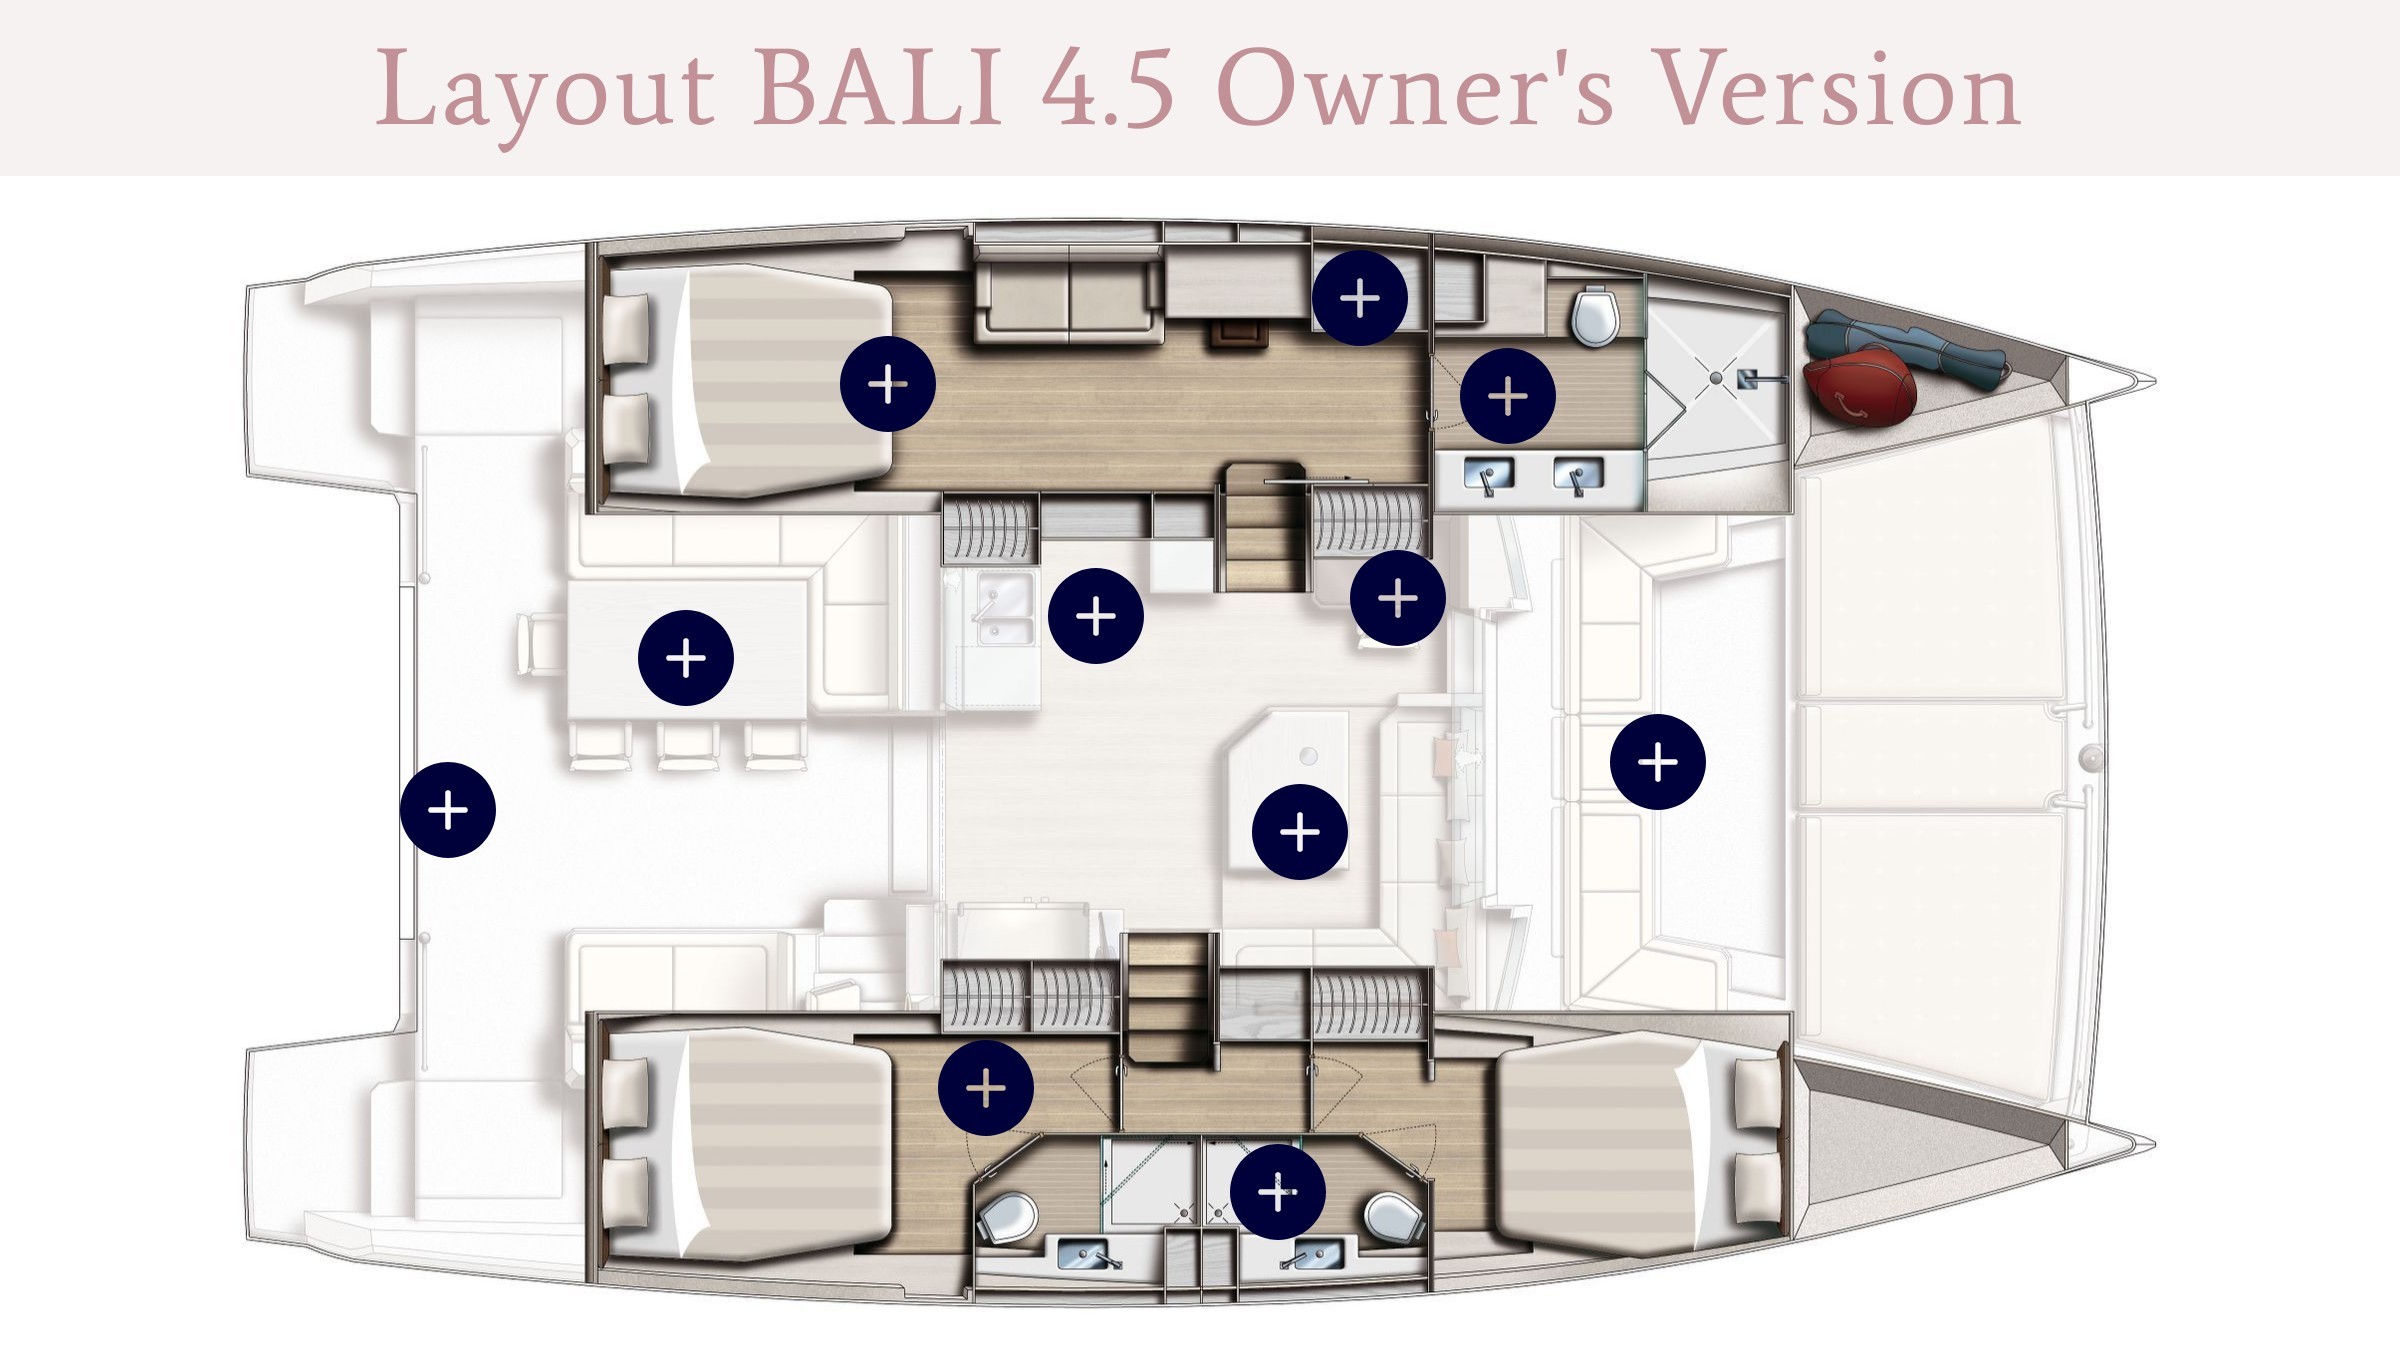 BALI 4.5 Owner's Version